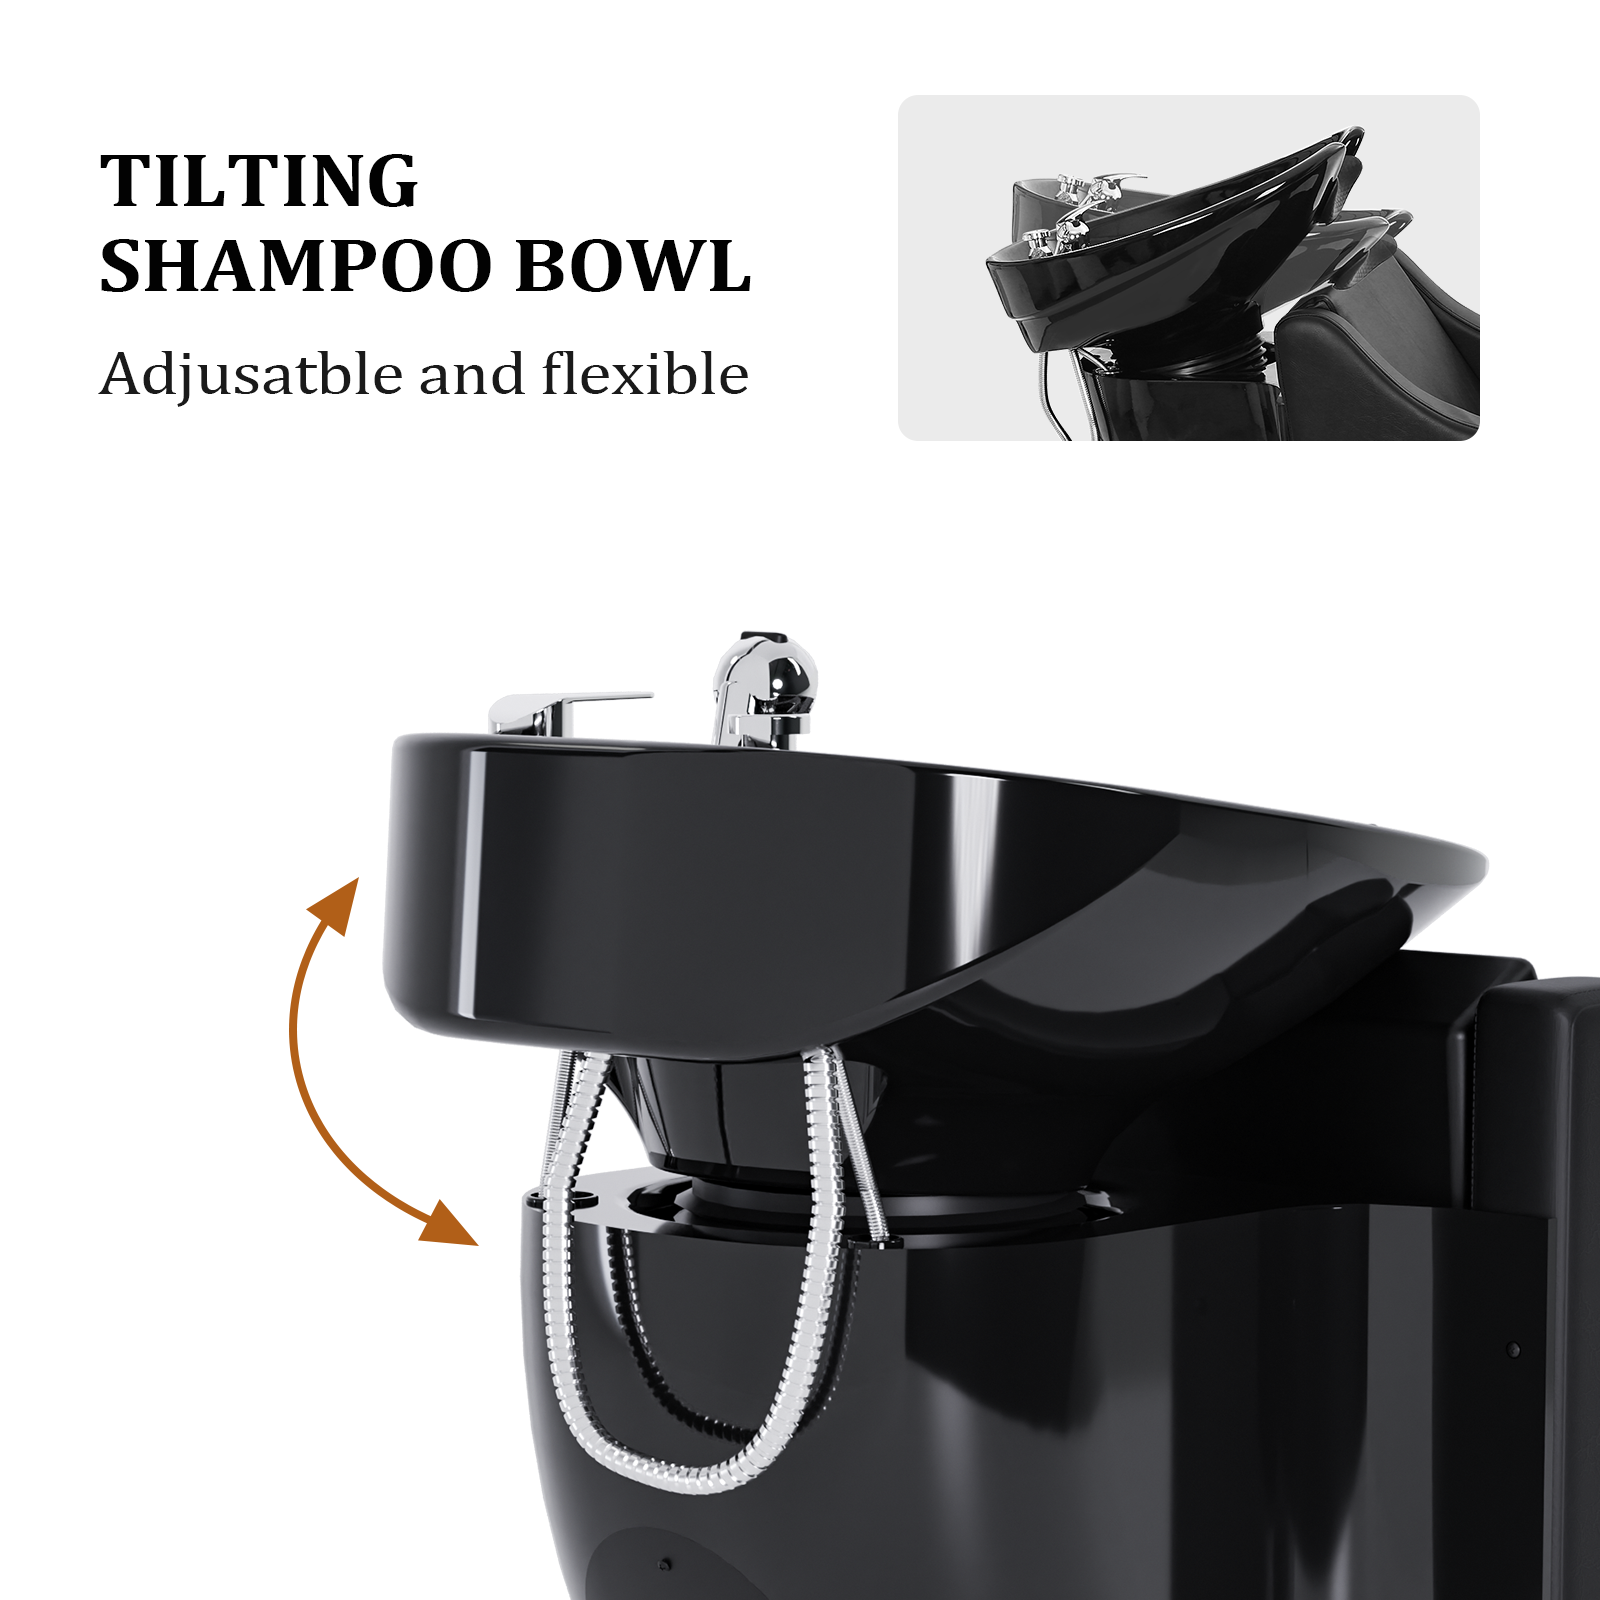 OmySalon Shampoo Sink for Salon, Hair Wash Chair with Electric Footrest